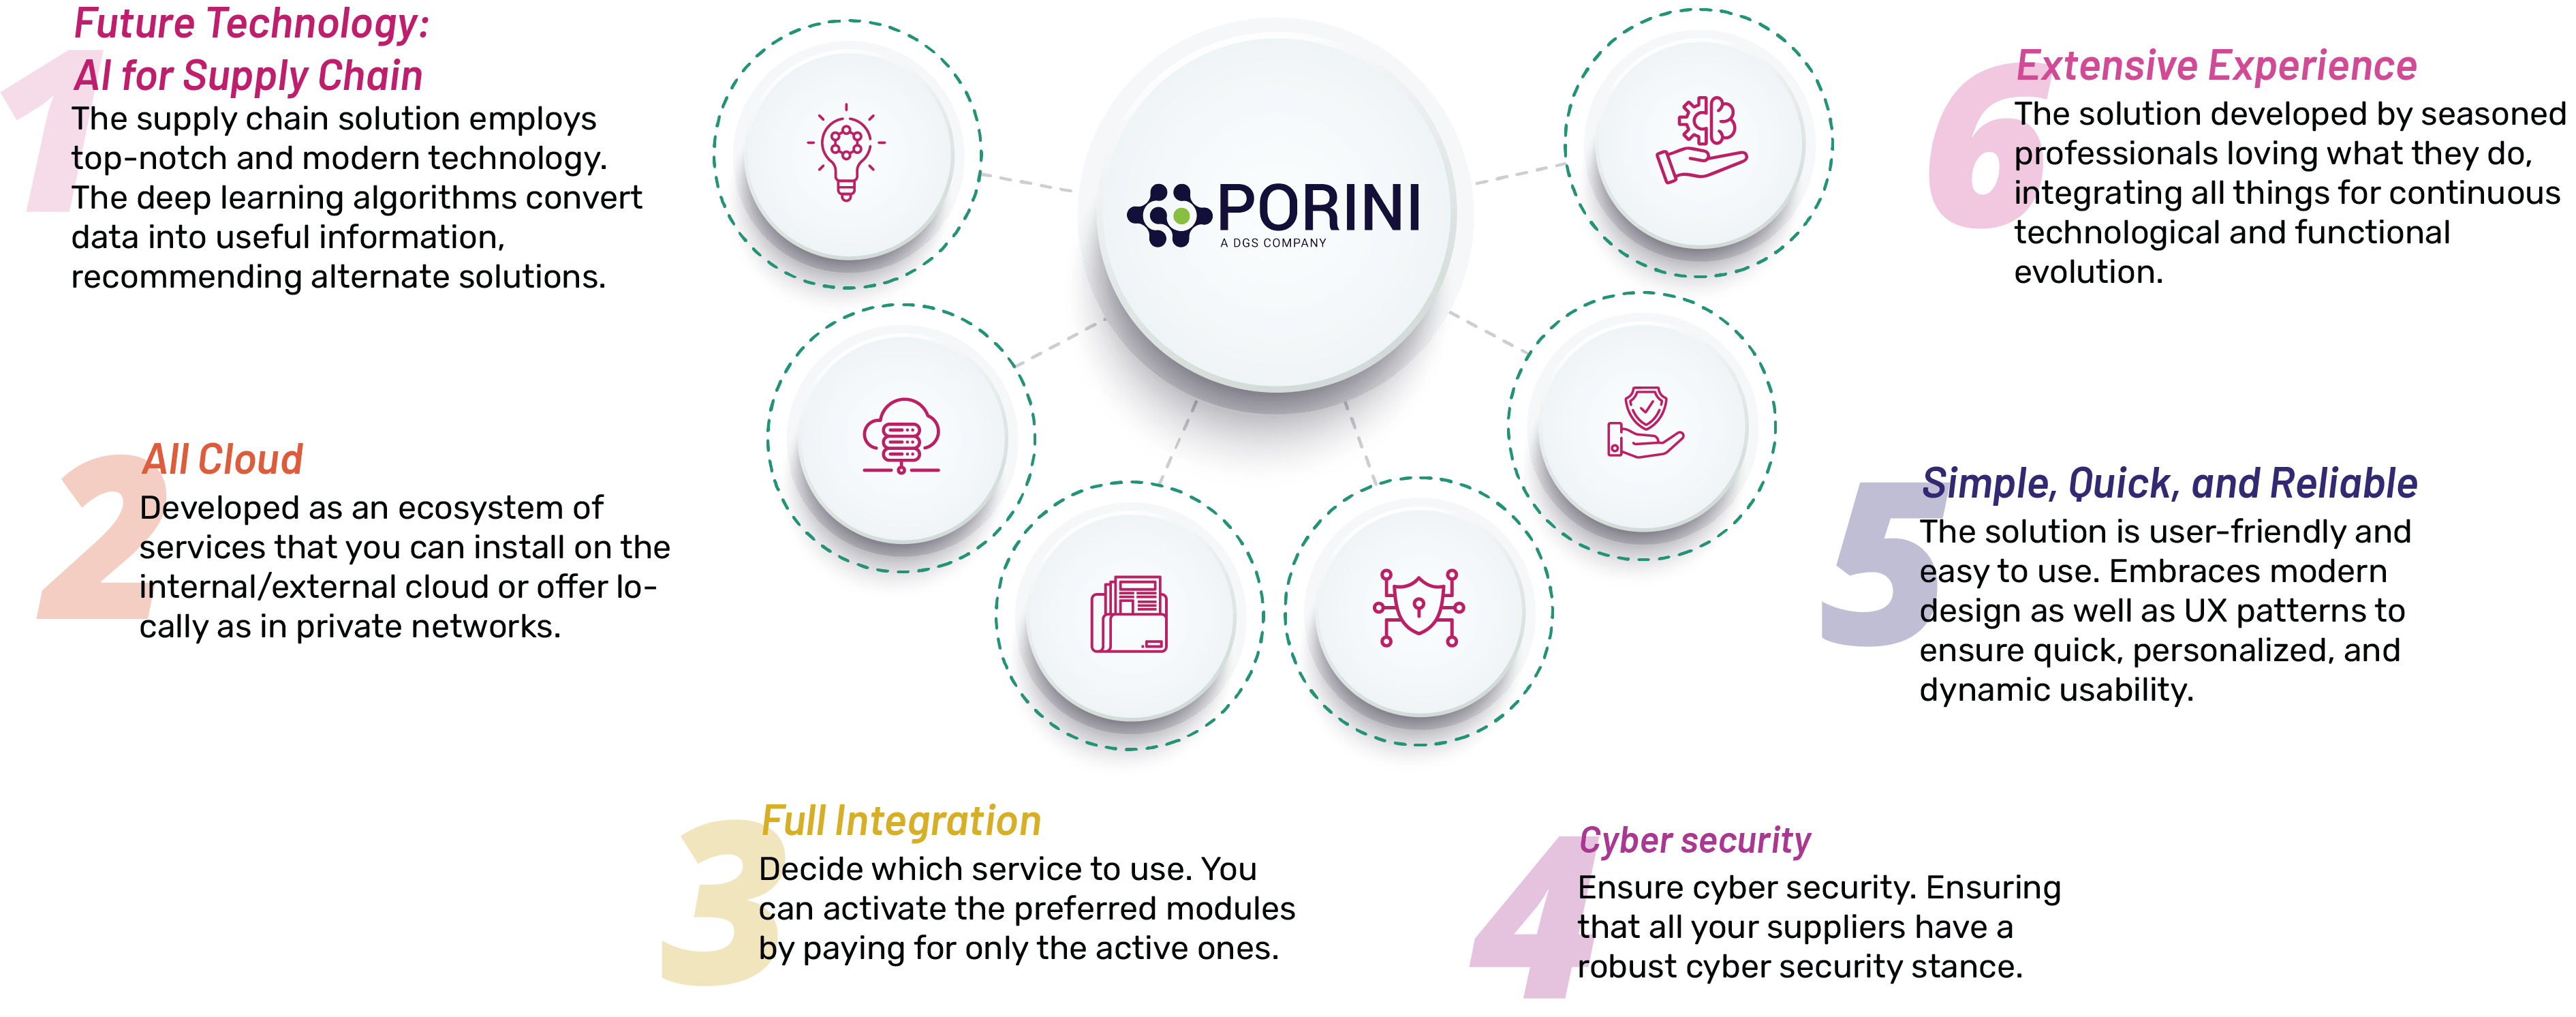 Porini Solutions